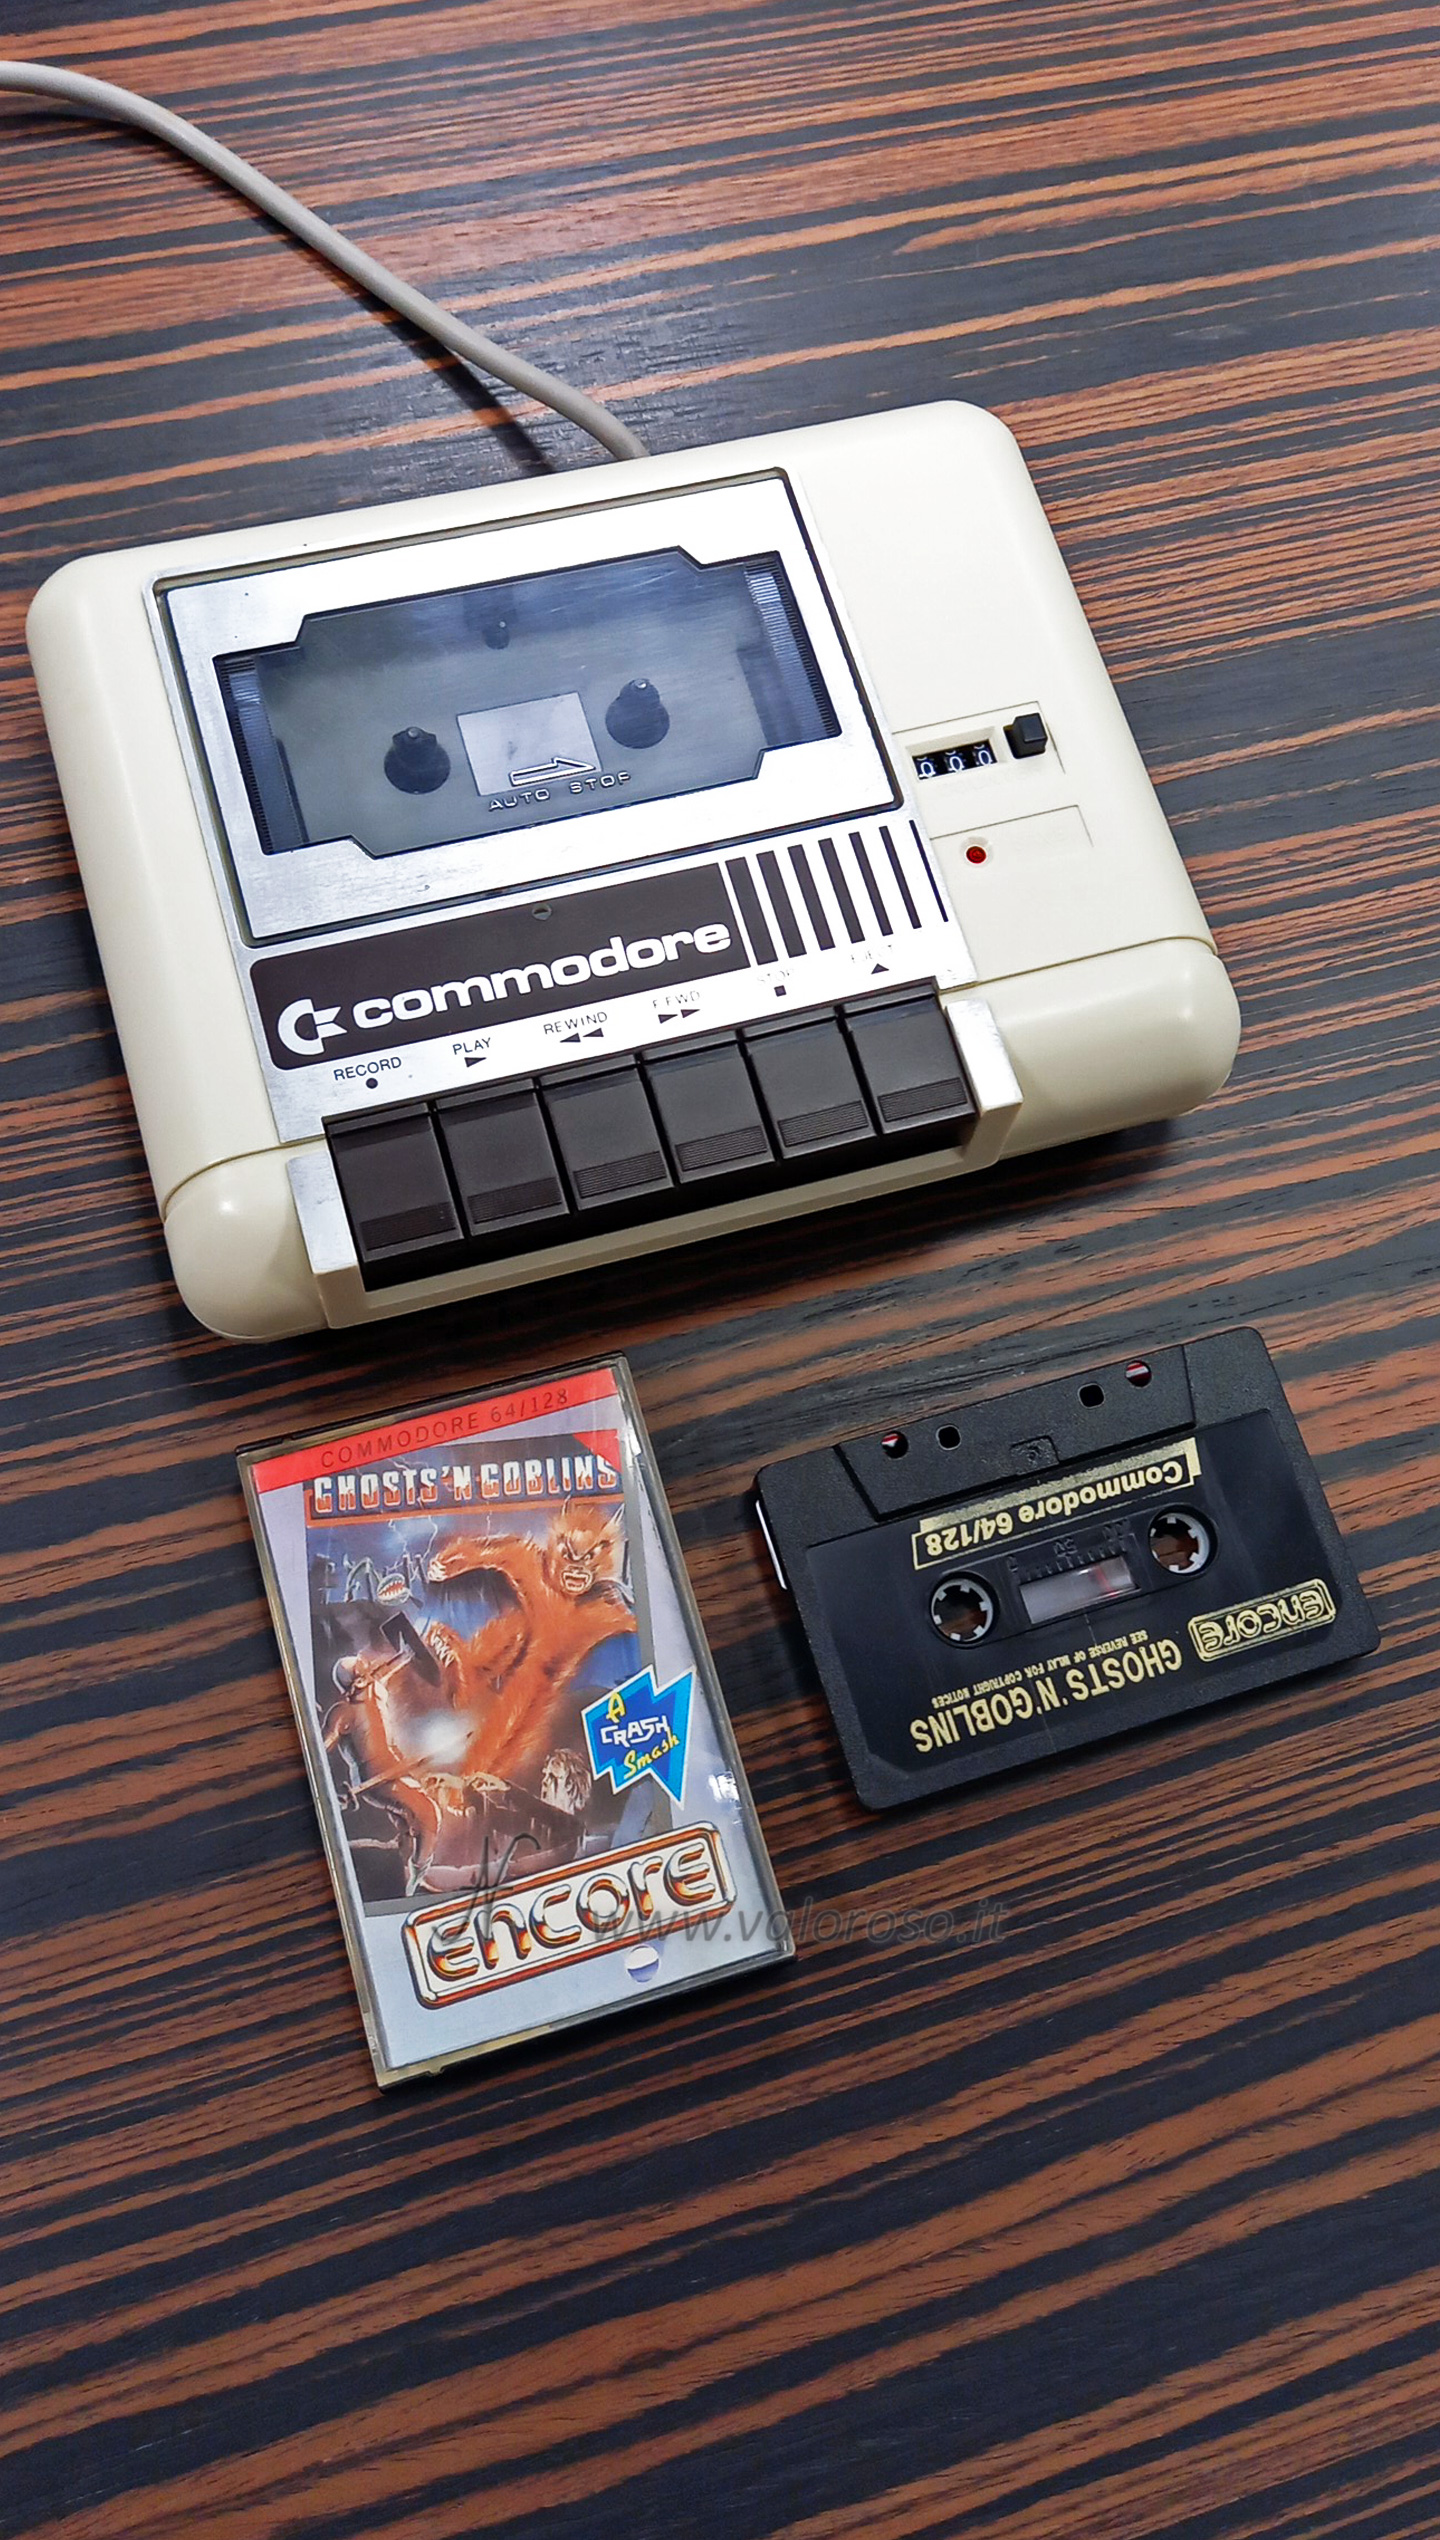 Ghosts'N'Goblins videogame, Encore, Commodore 1531 C2N datassette